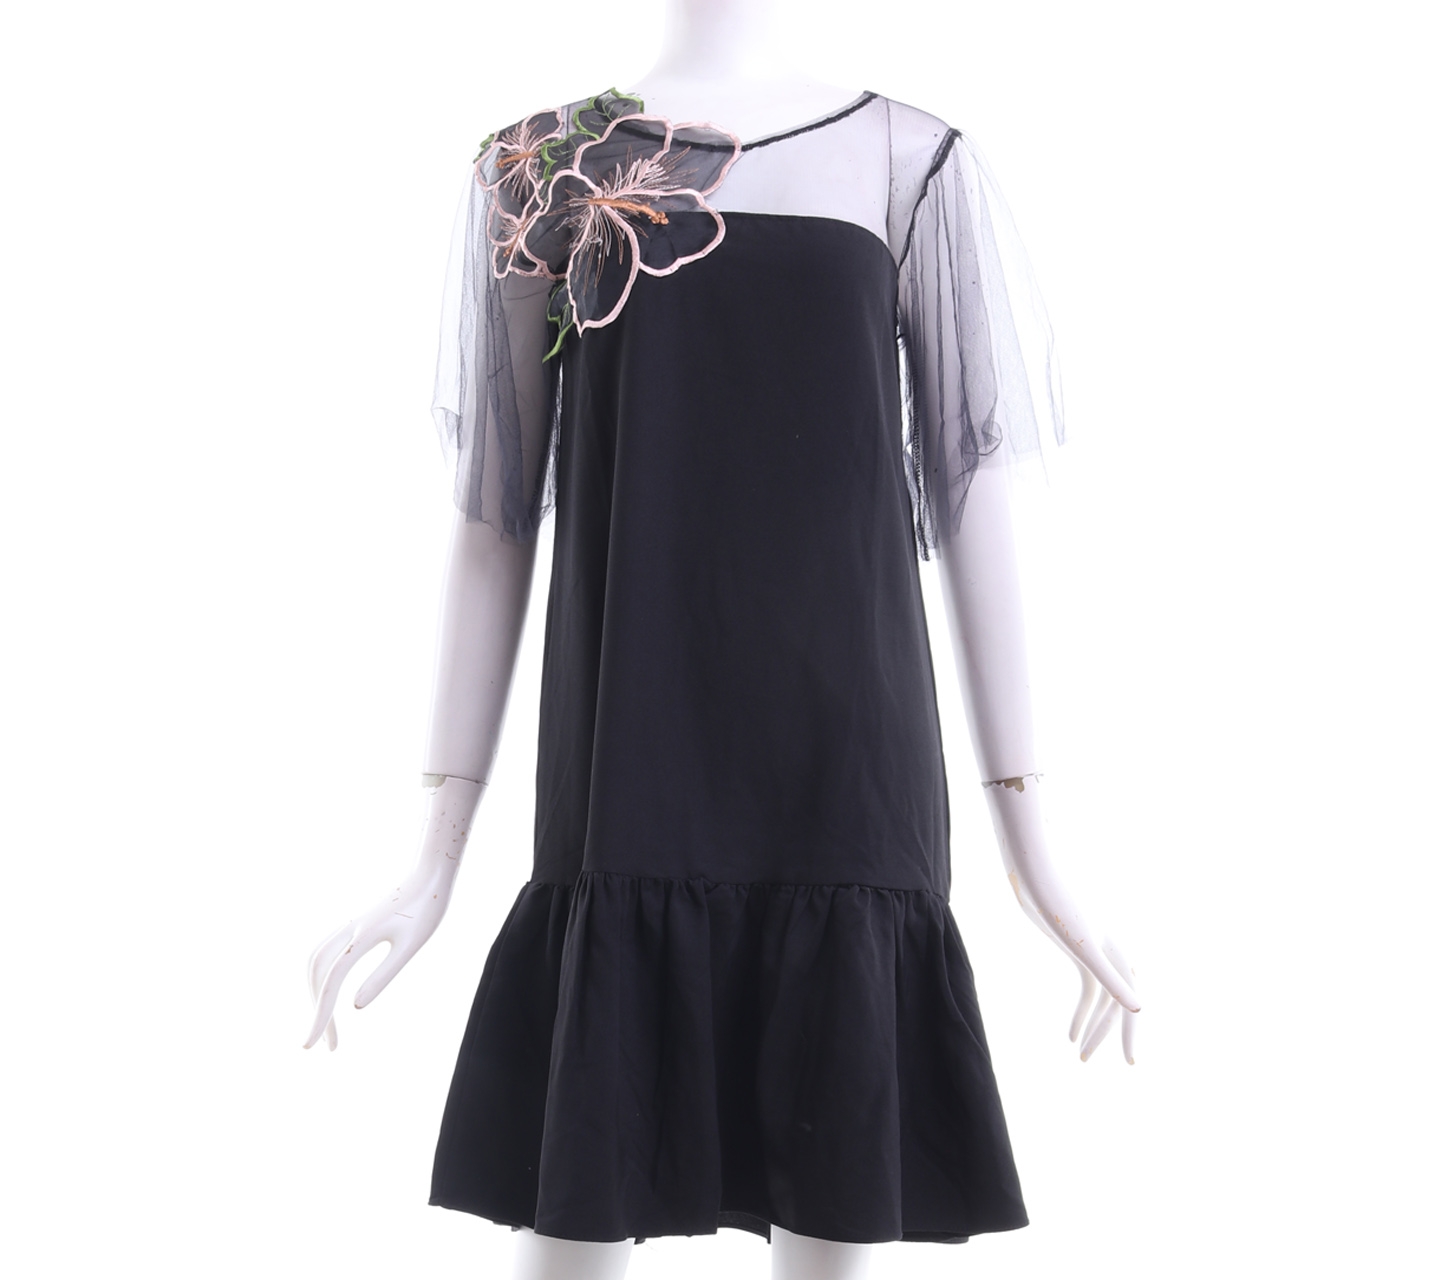 Marie & Frisco Black Sheer Mini Dress